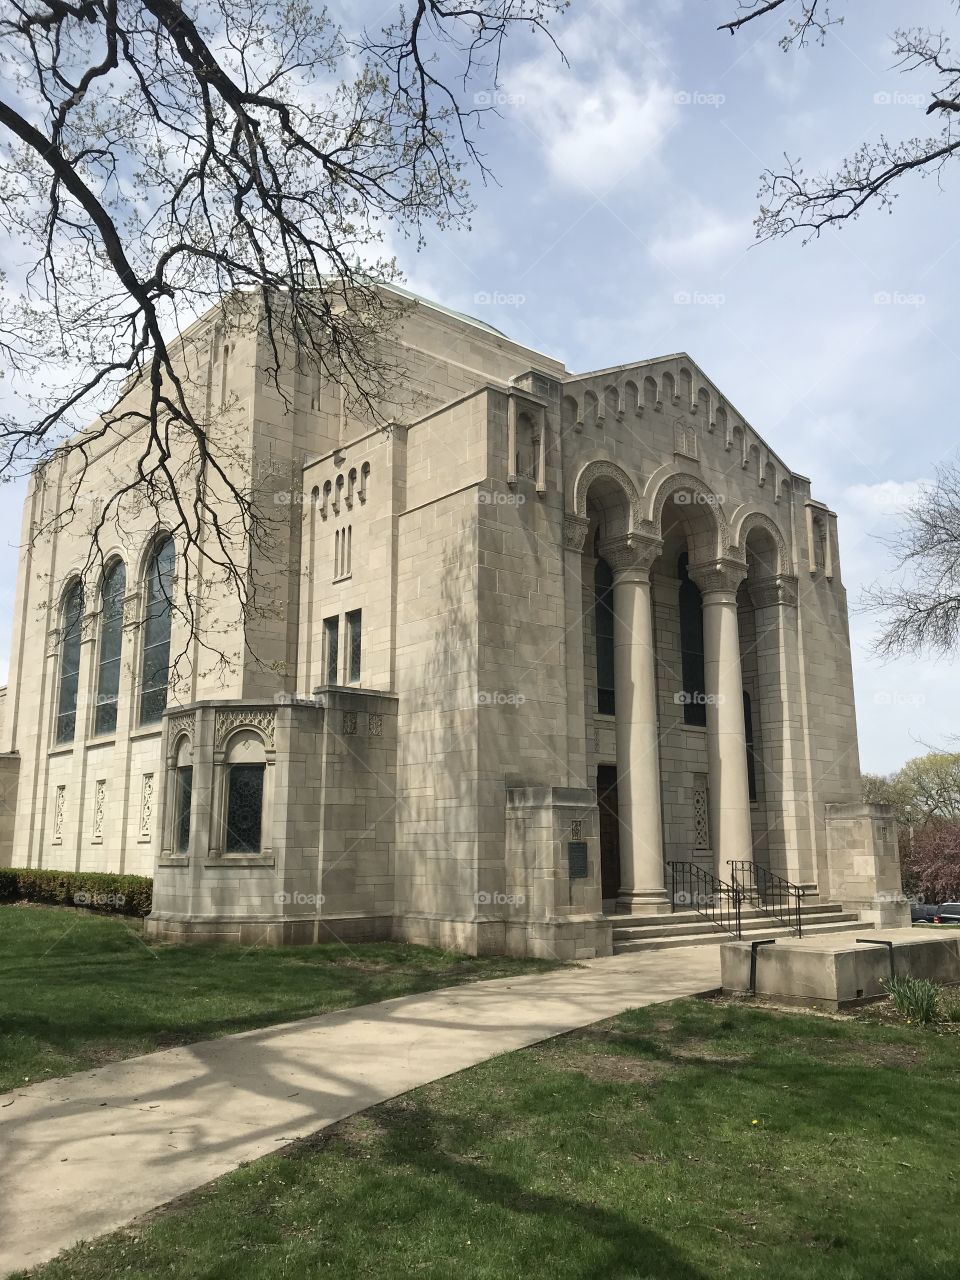 Temple B’Nai Jeshurun, Des Moines, Iowa